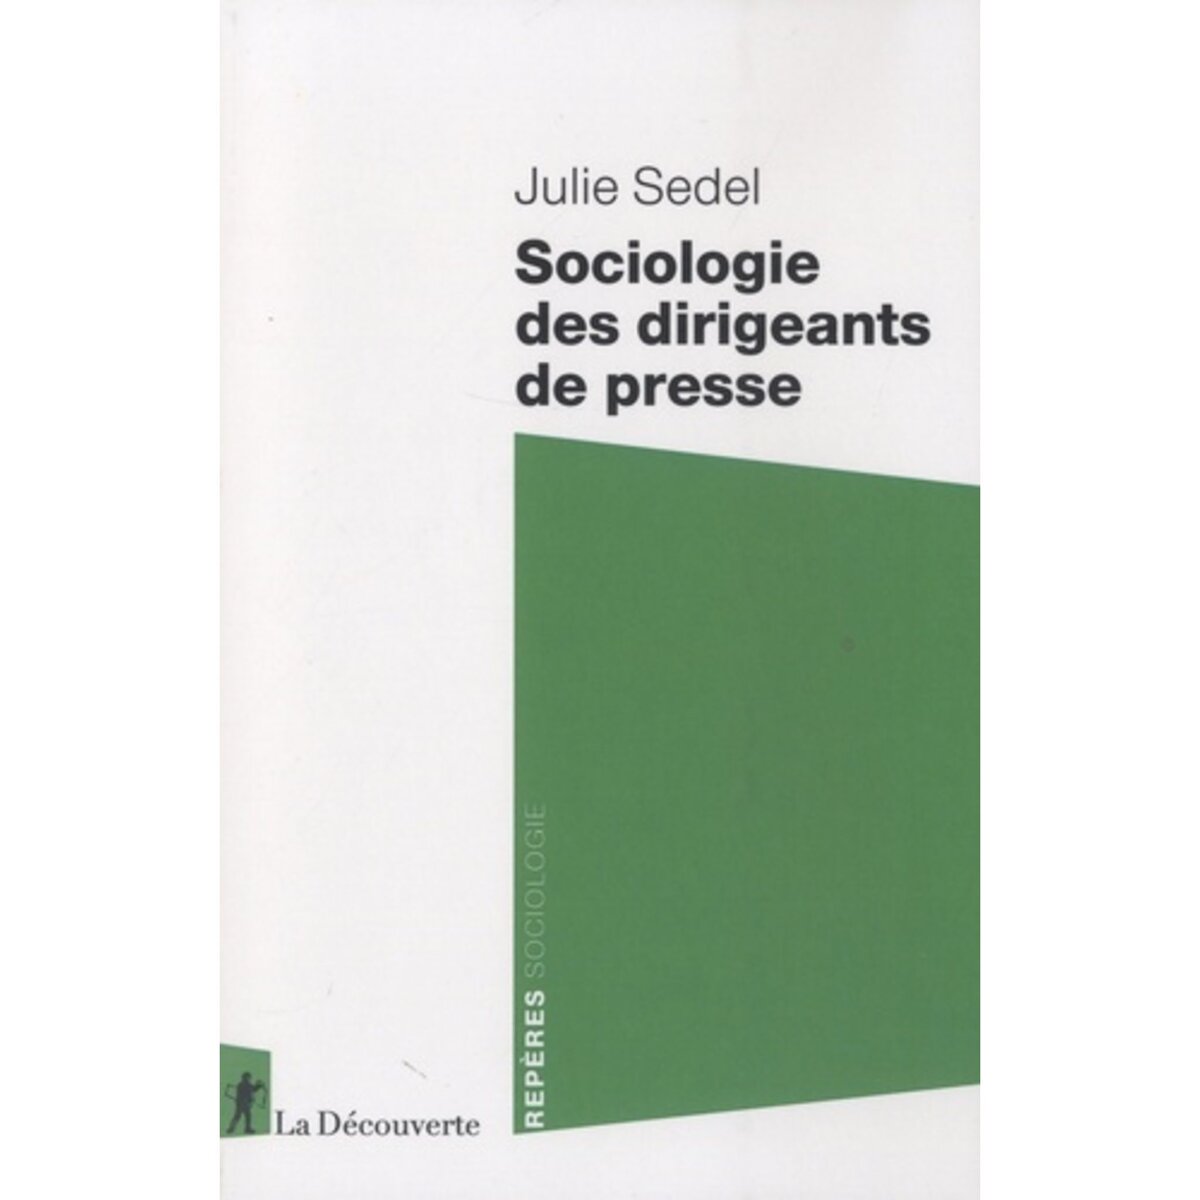  SOCIOLOGIE DES DIRIGEANTS DE PRESSE, Sedel Julie